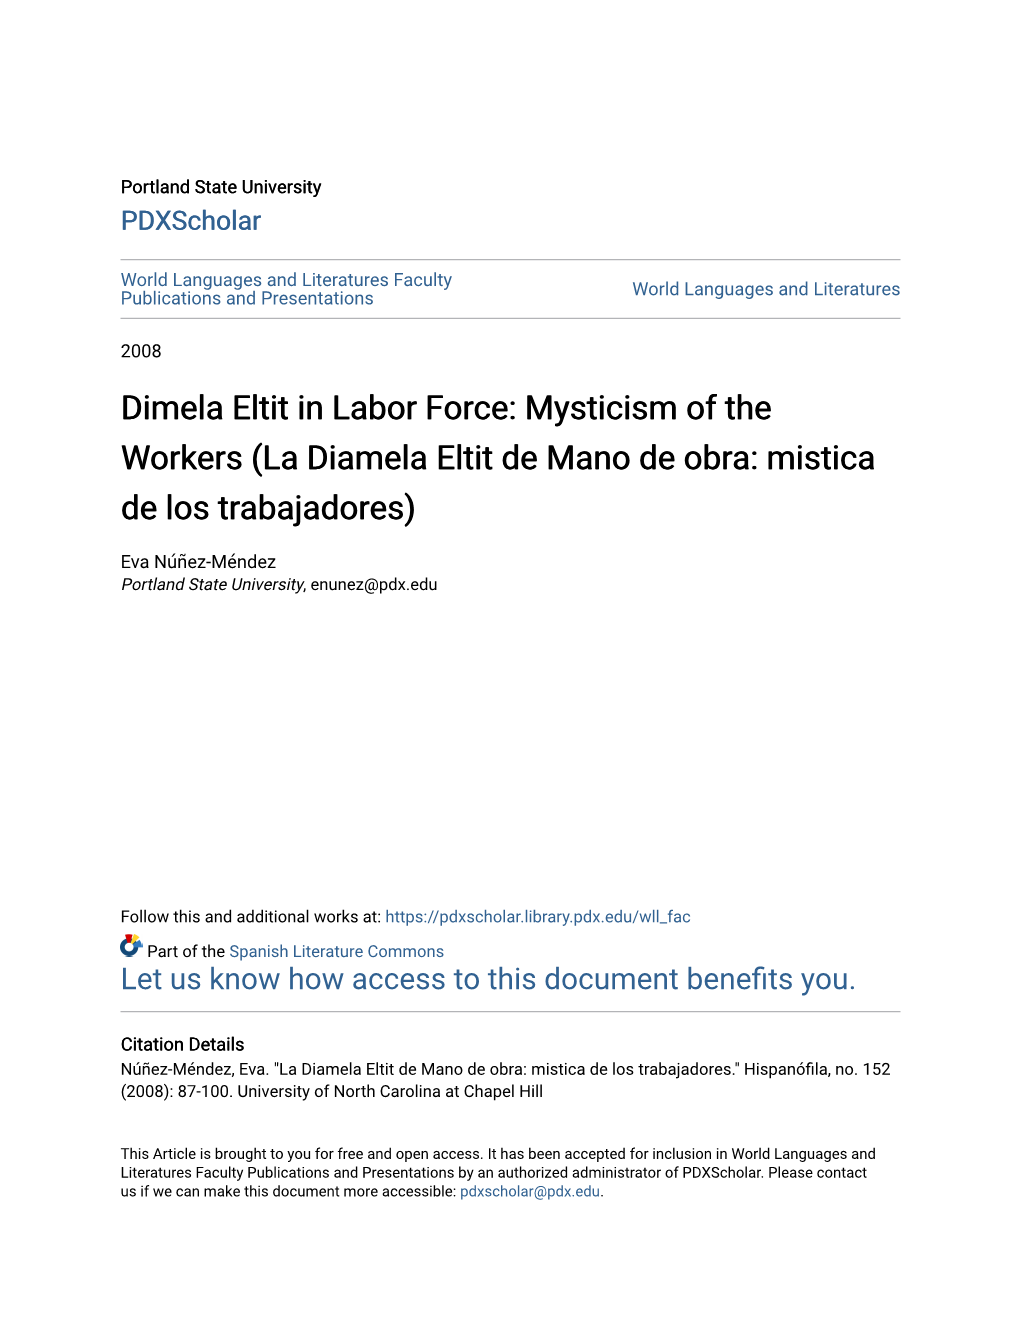 Dimela Eltit in Labor Force: Mysticism of the Workers (La Diamela Eltit De Mano De Obra: Mistica De Los Trabajadores)